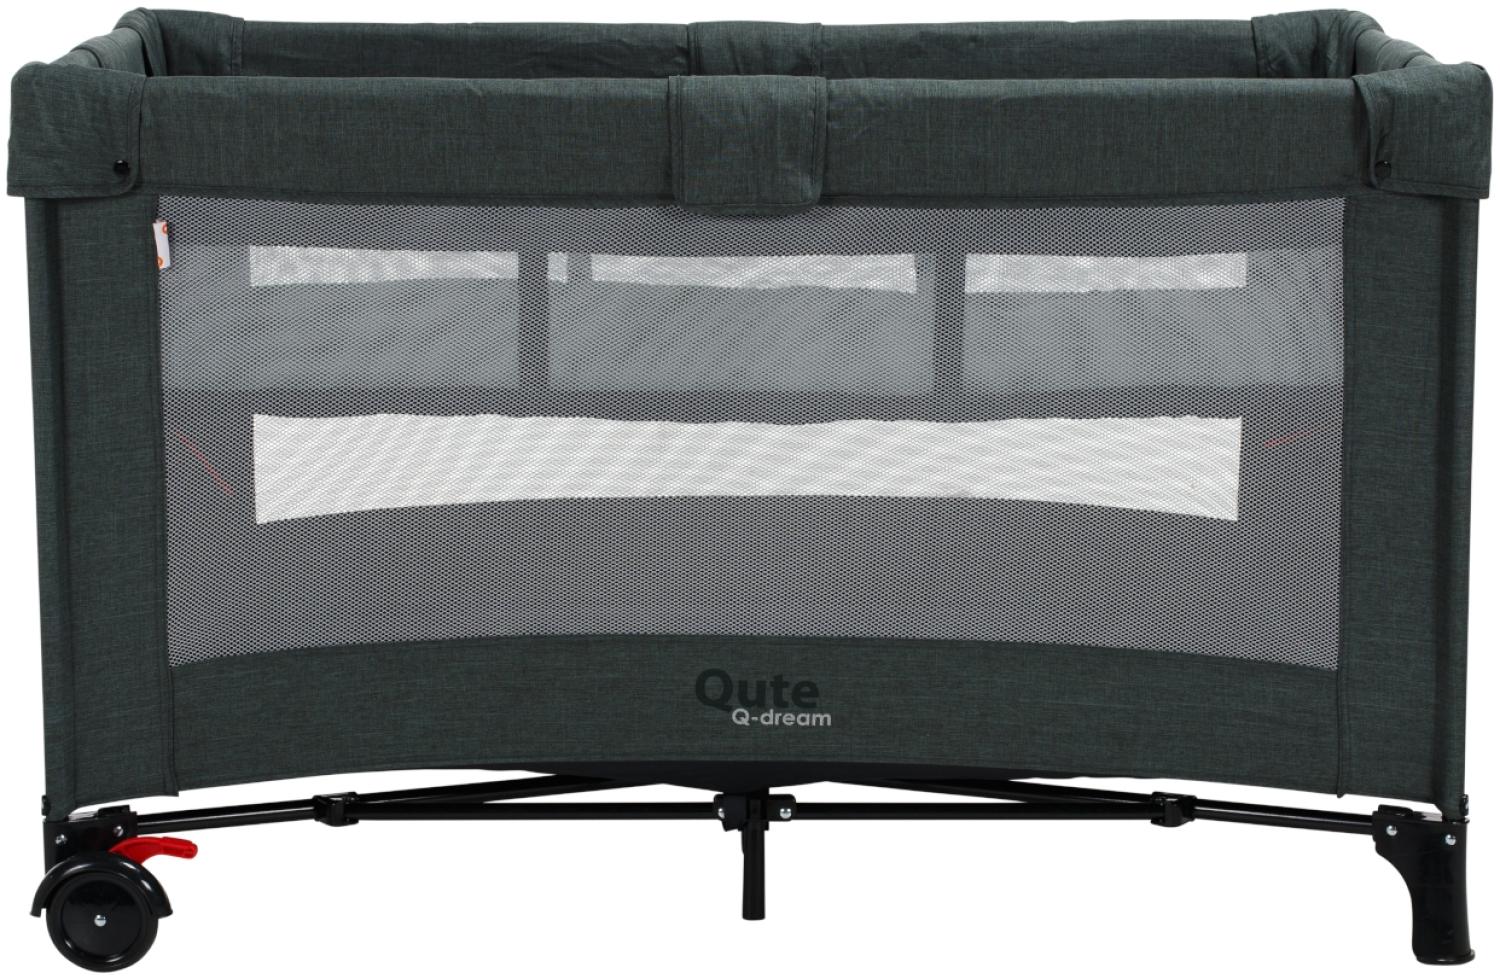 Qute Q-Dream Reisebett Jeans / Grün Grün Bild 1